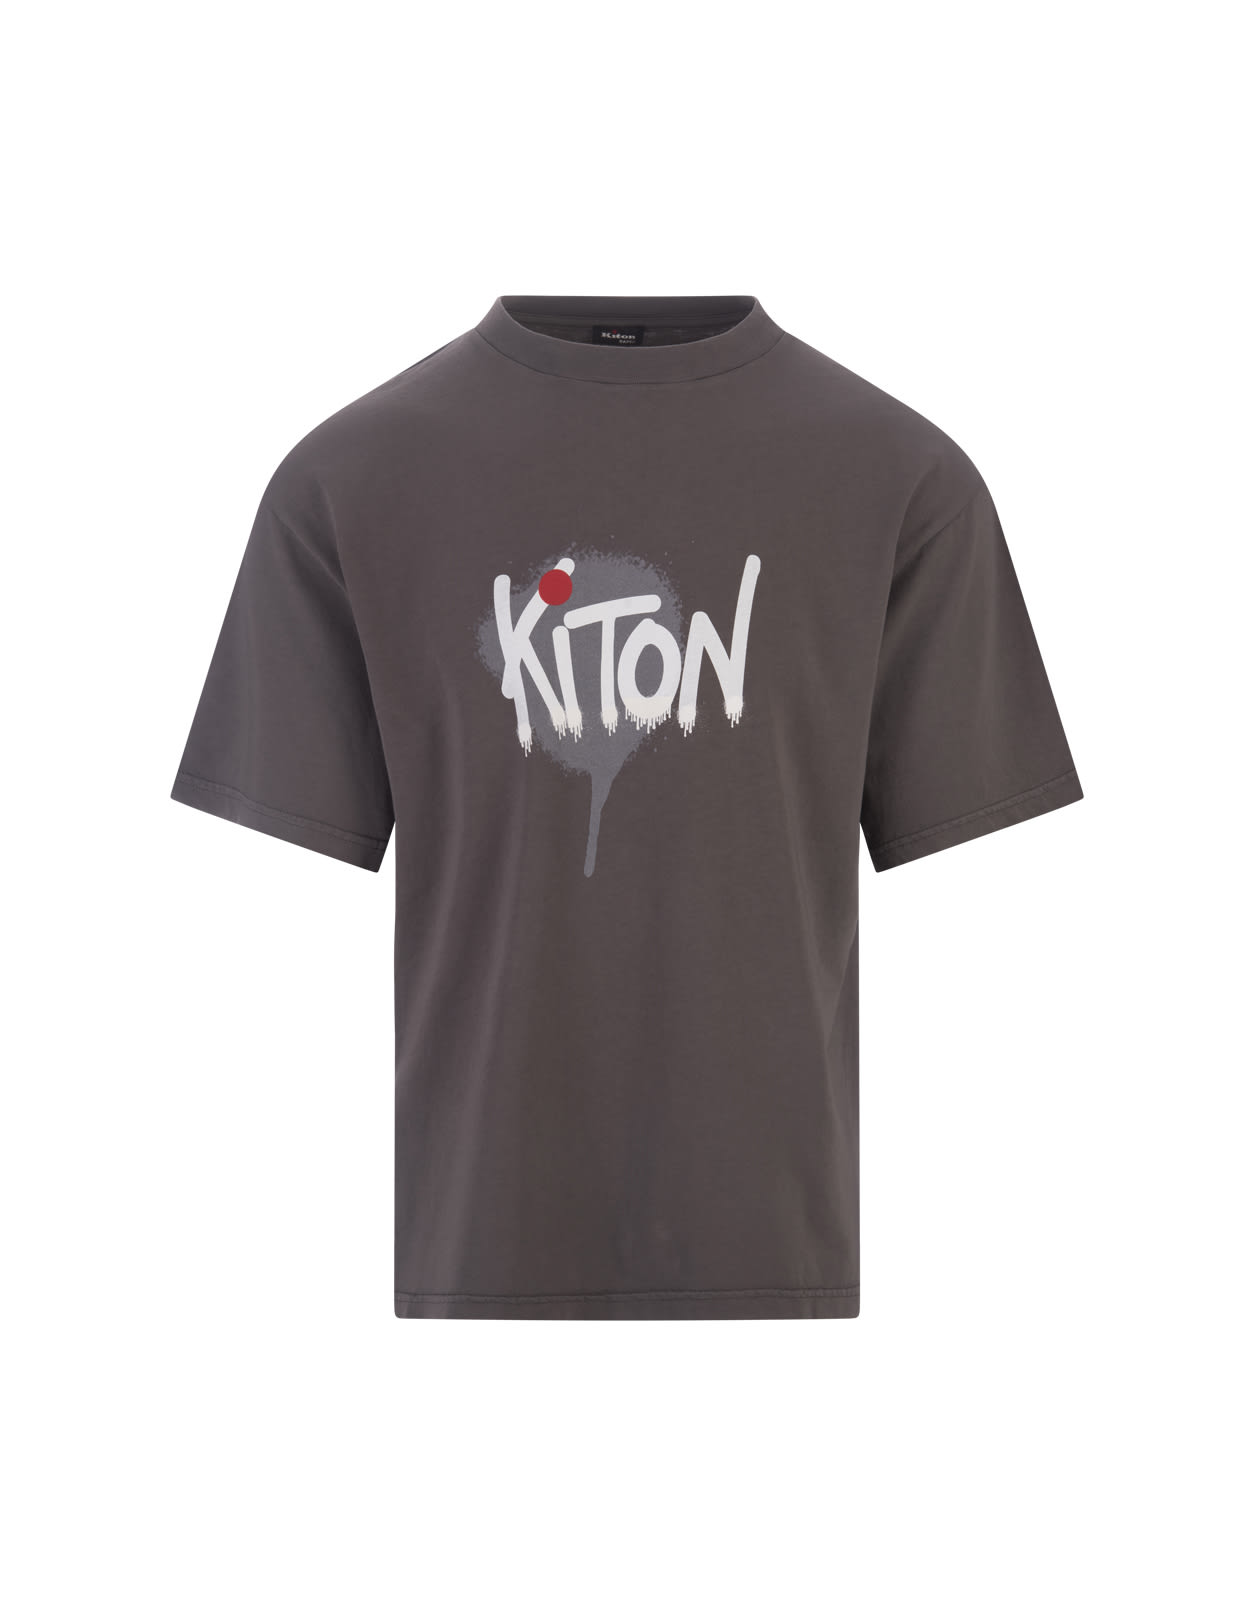 Kiton Grey T-shirt With Graffiti Style  Logo